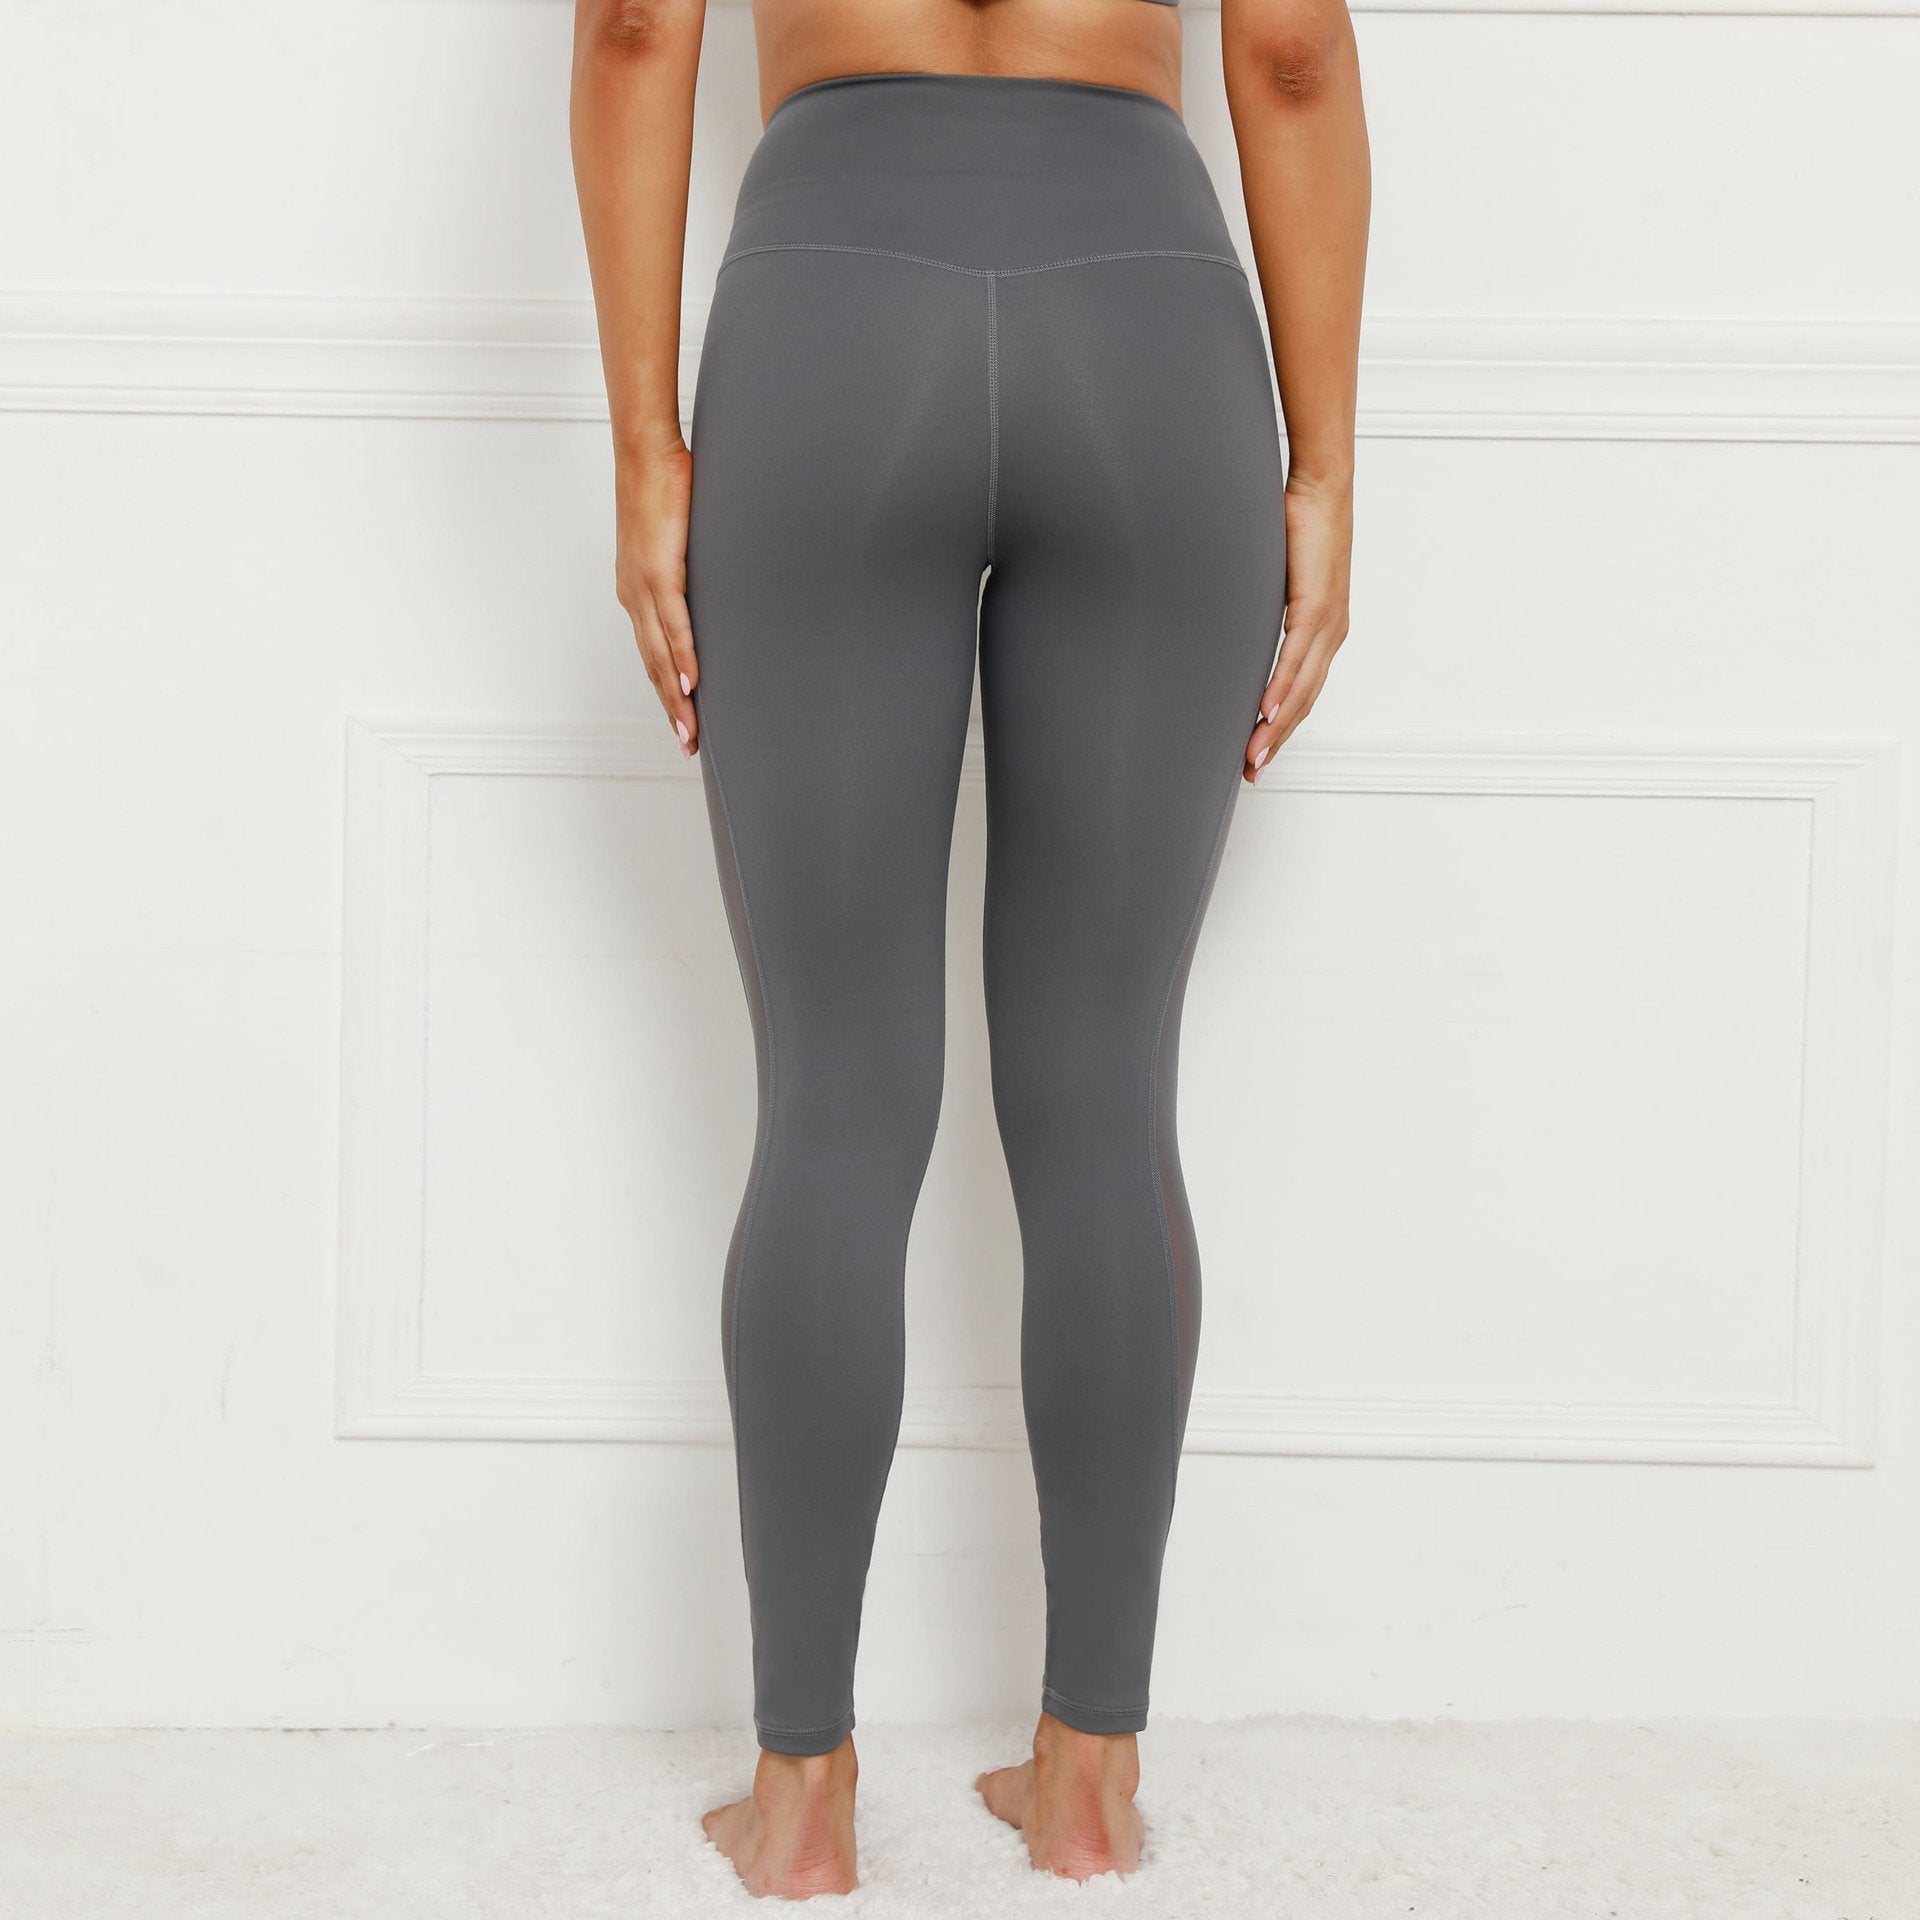 Sexy Elastic Exercising High Waist Yoga Leggings-Activewear-Free Shipping at meselling99